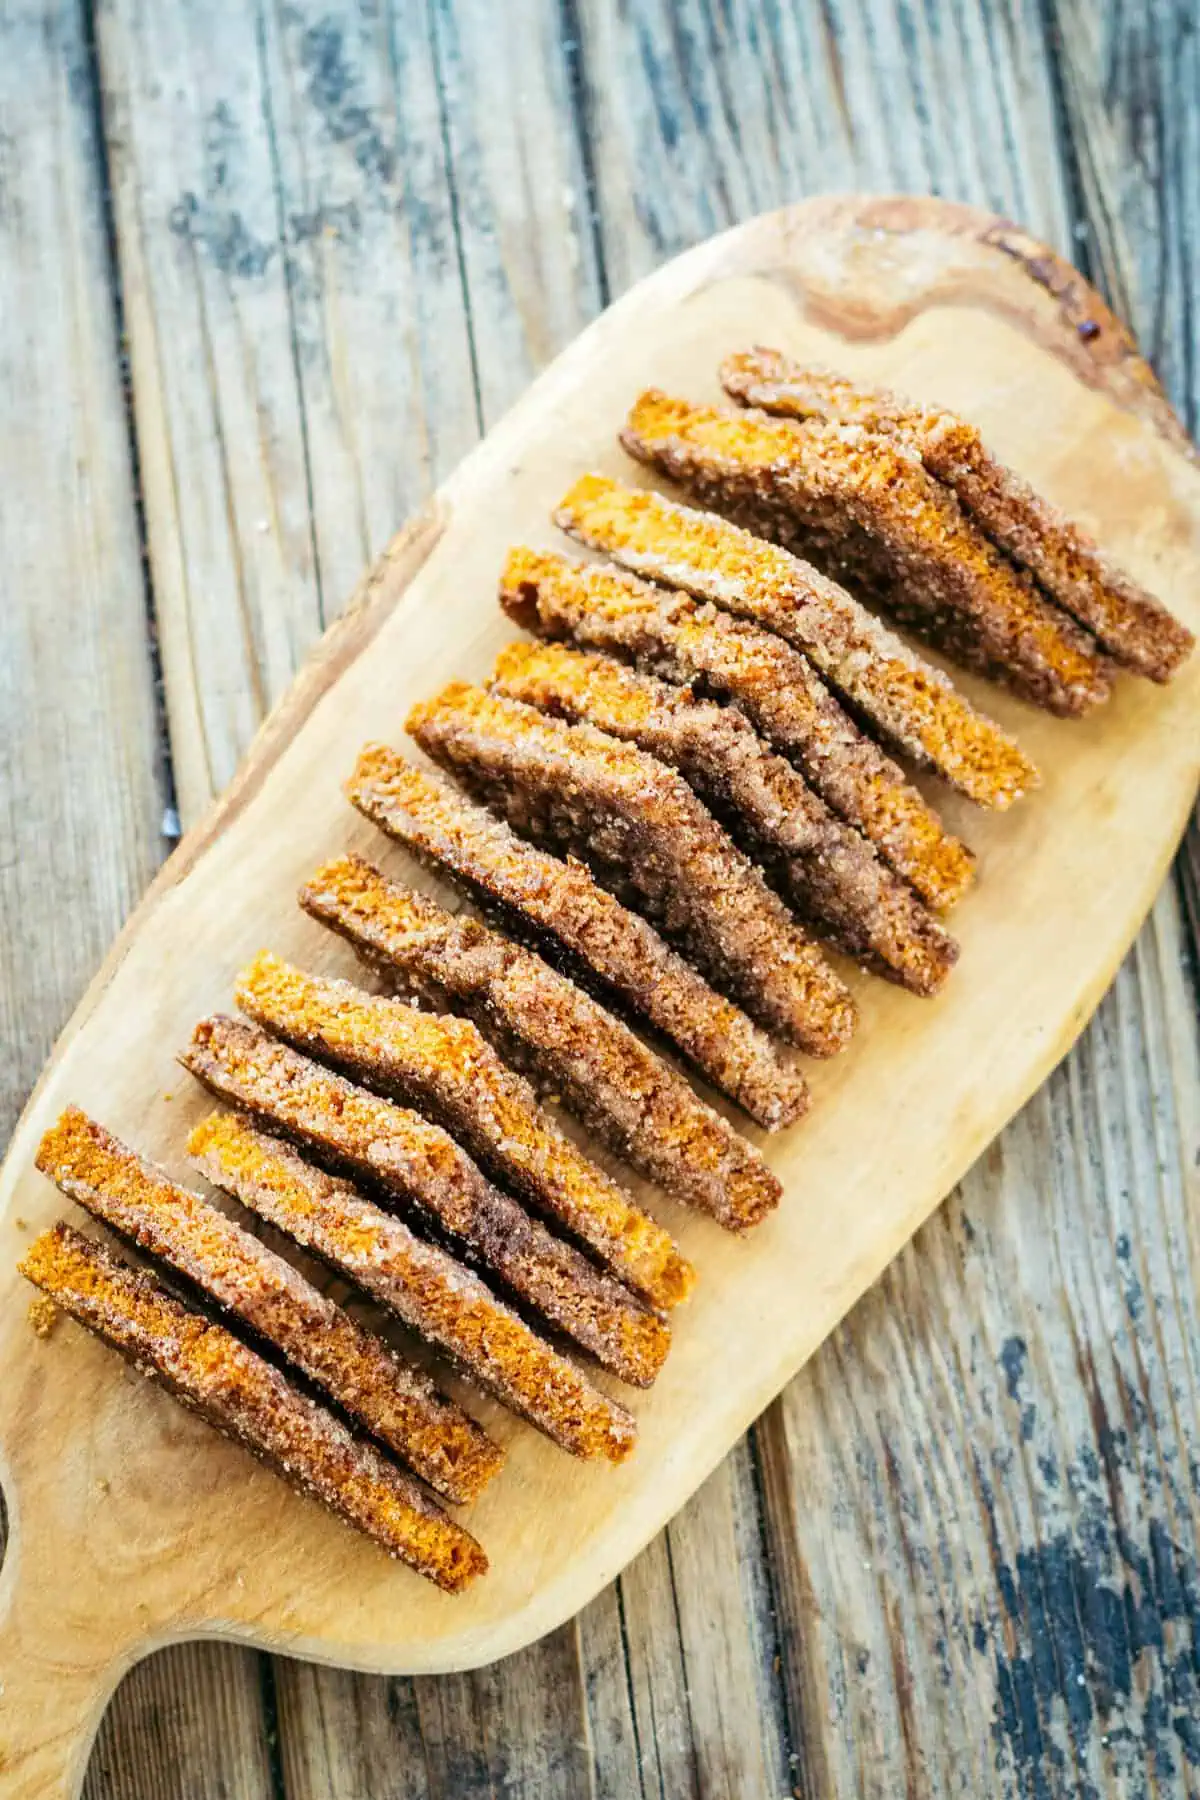 A long row of triangular shaped cinnamon toast.